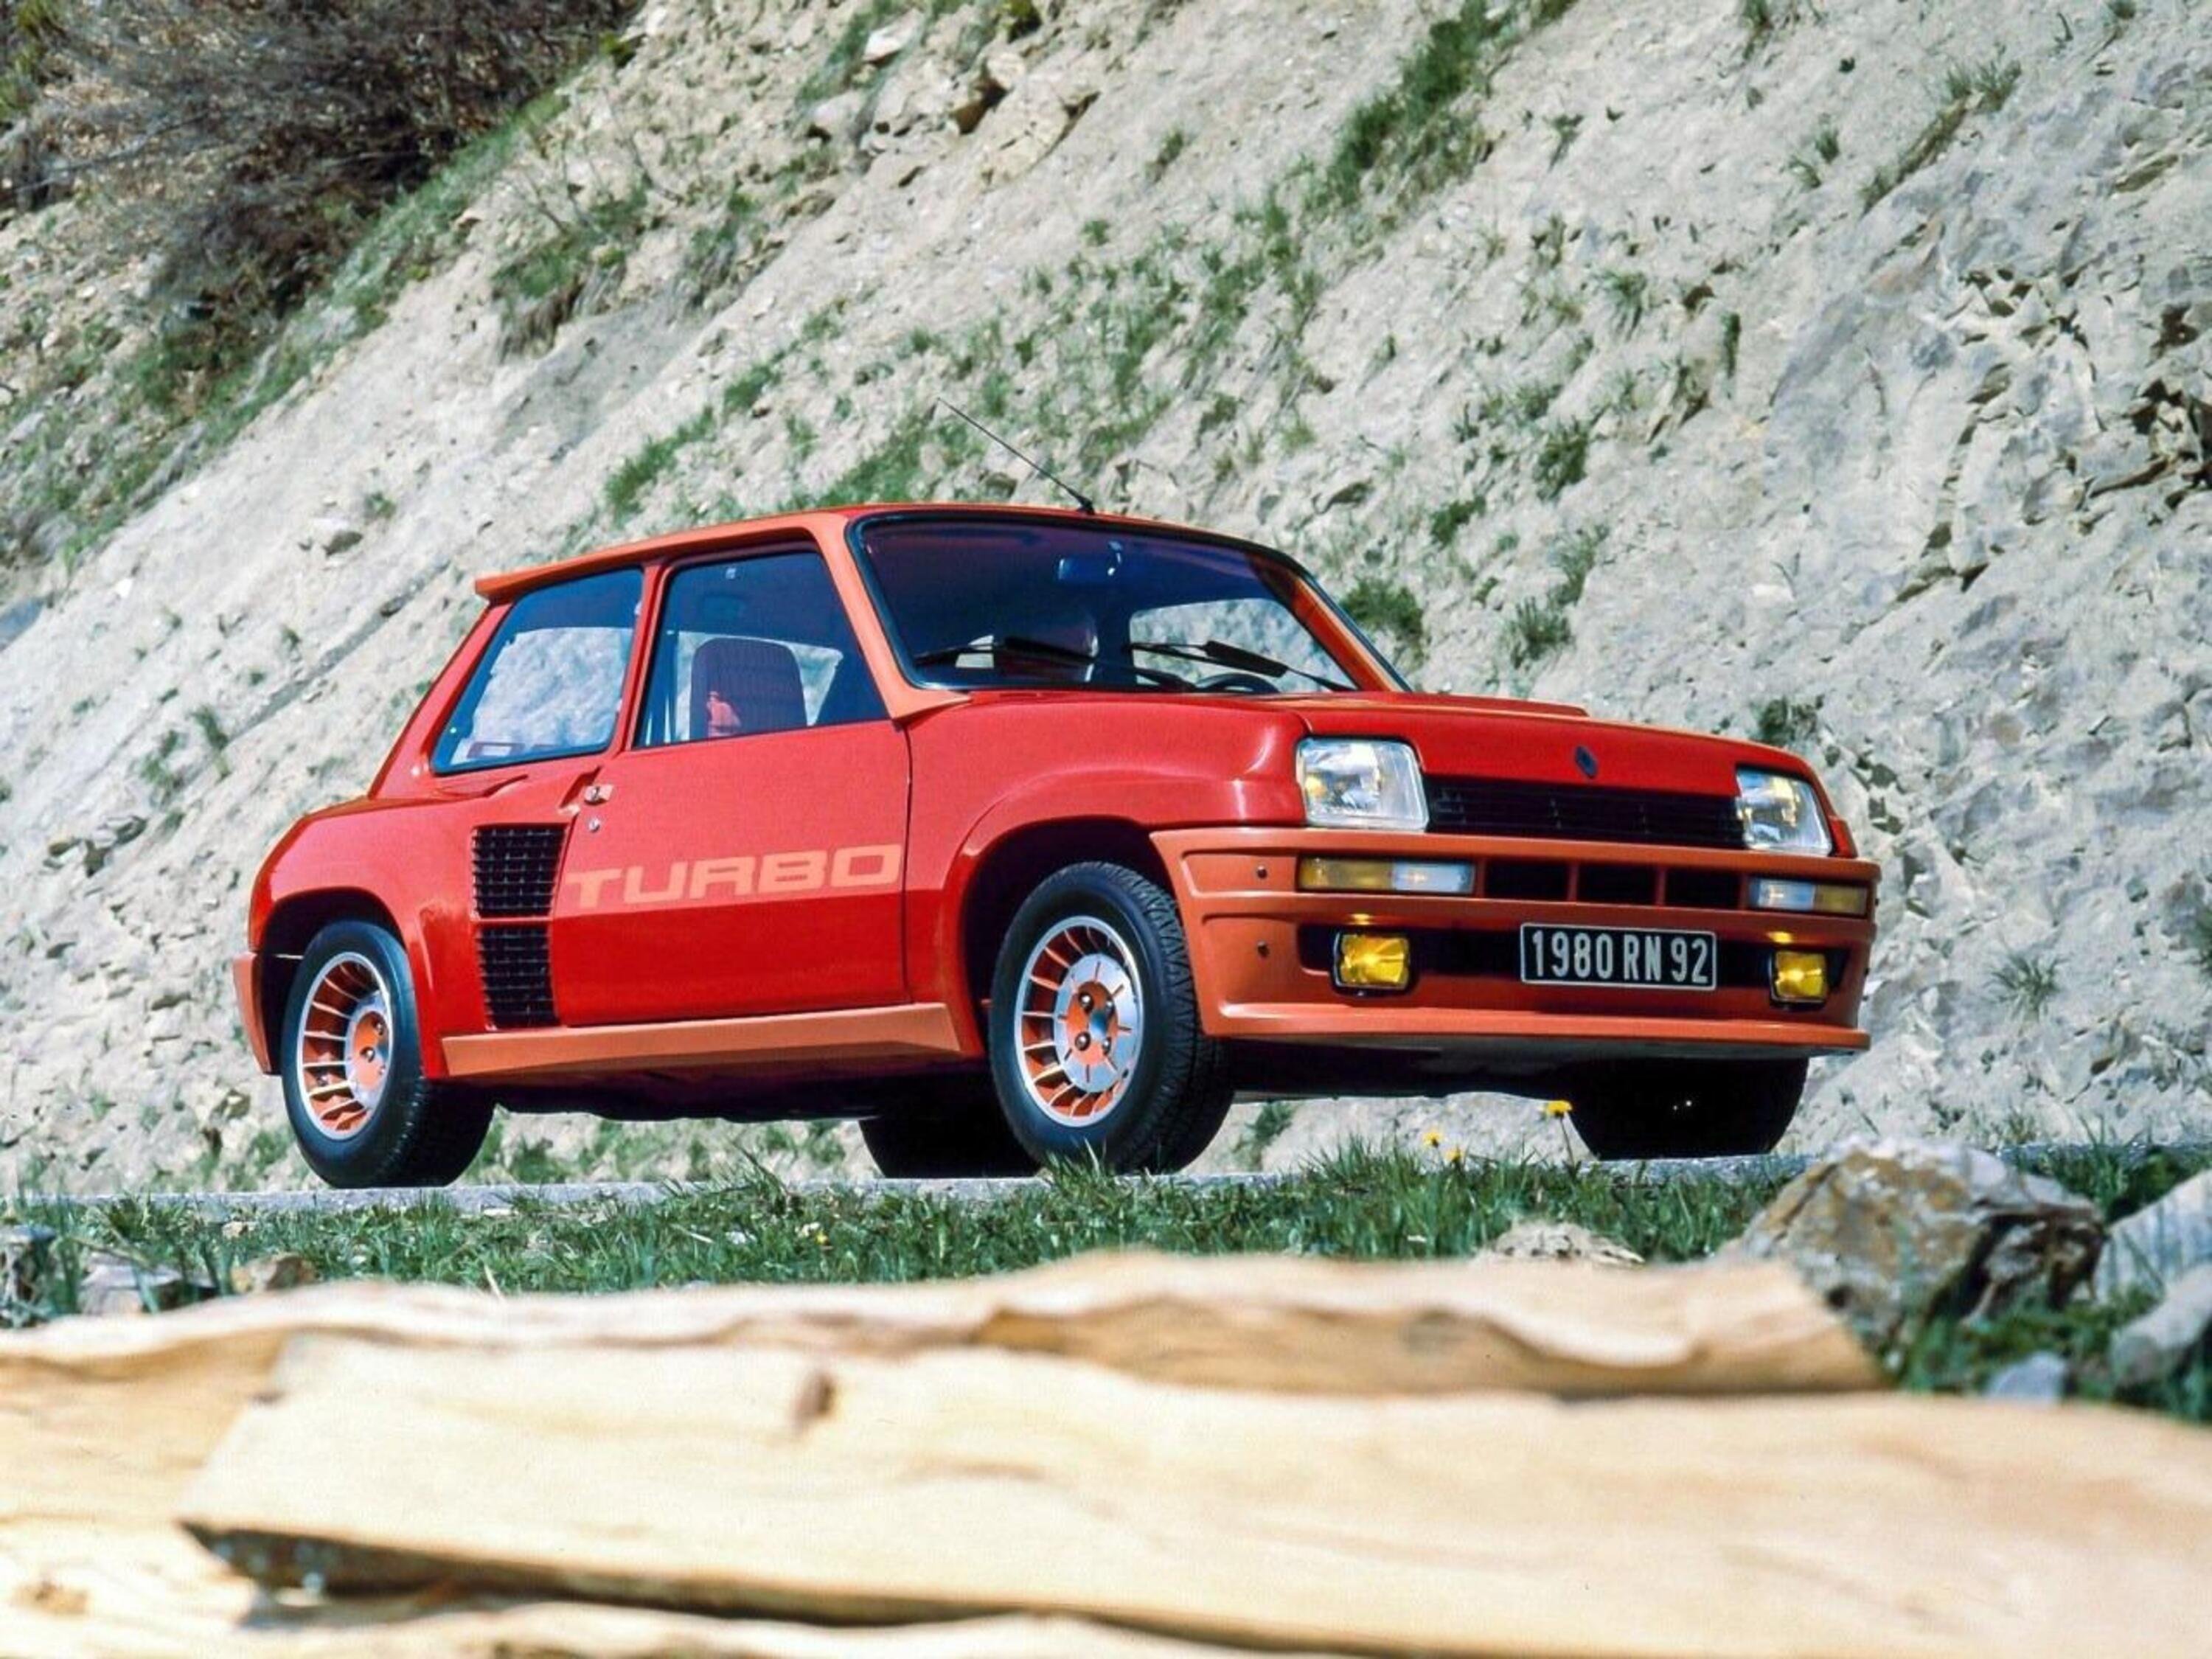 Renault 5 Turbo, i suoi primi 40 anni